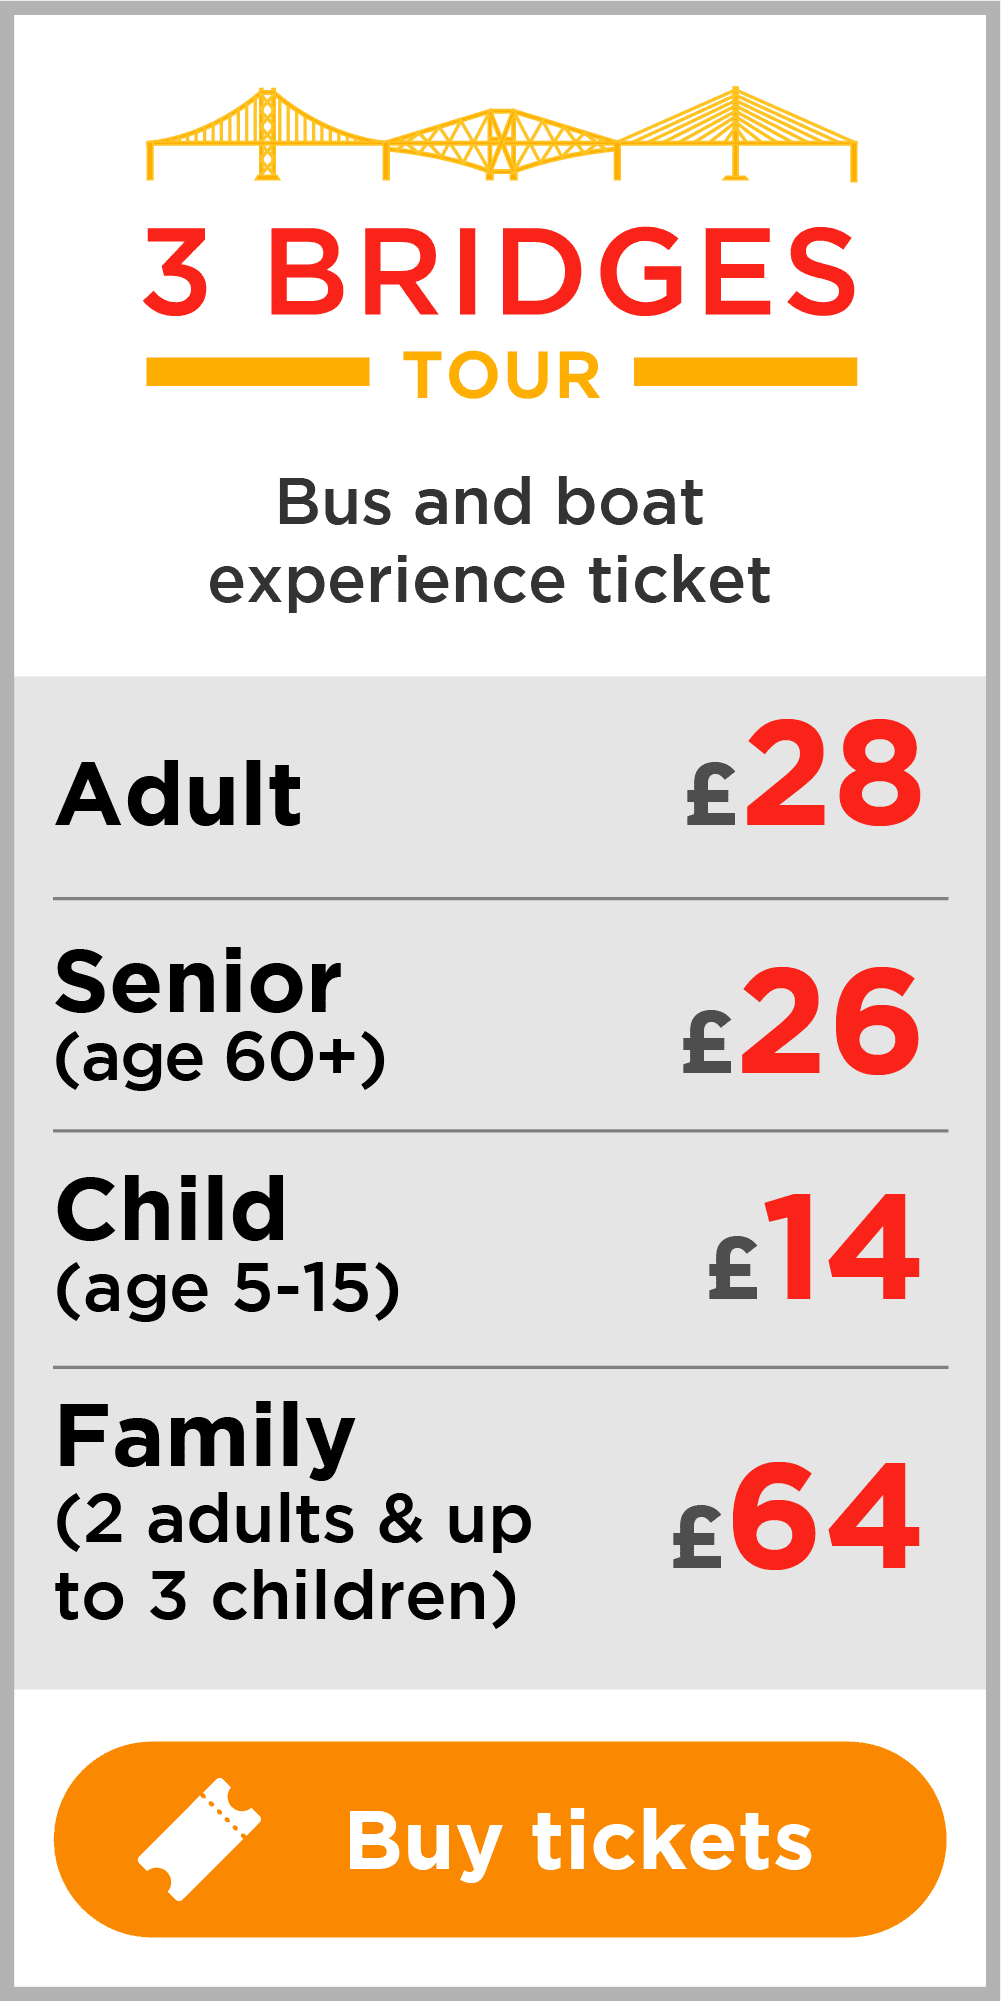 3 Bridges Tour Tickets £28 Adult £26 Senior £14 Child £64 Family